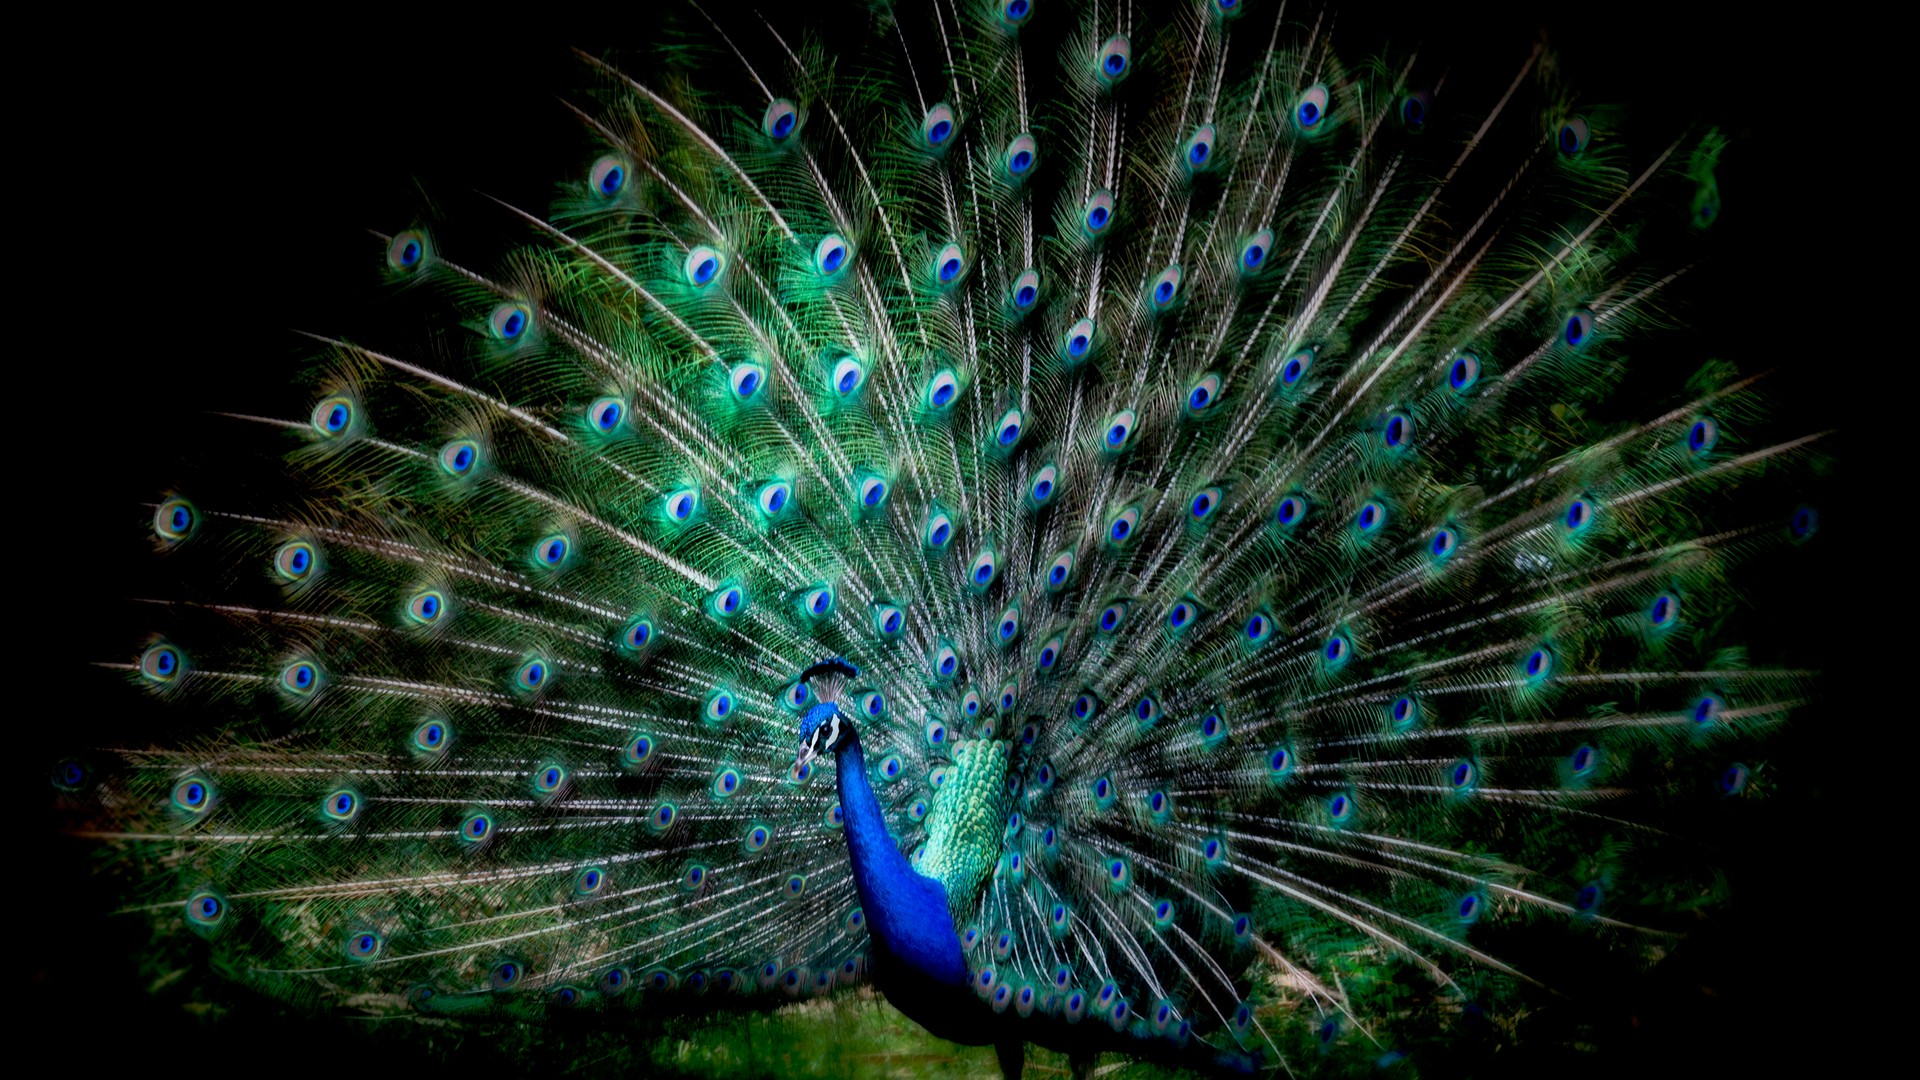 Blue Peacock Wallpaper